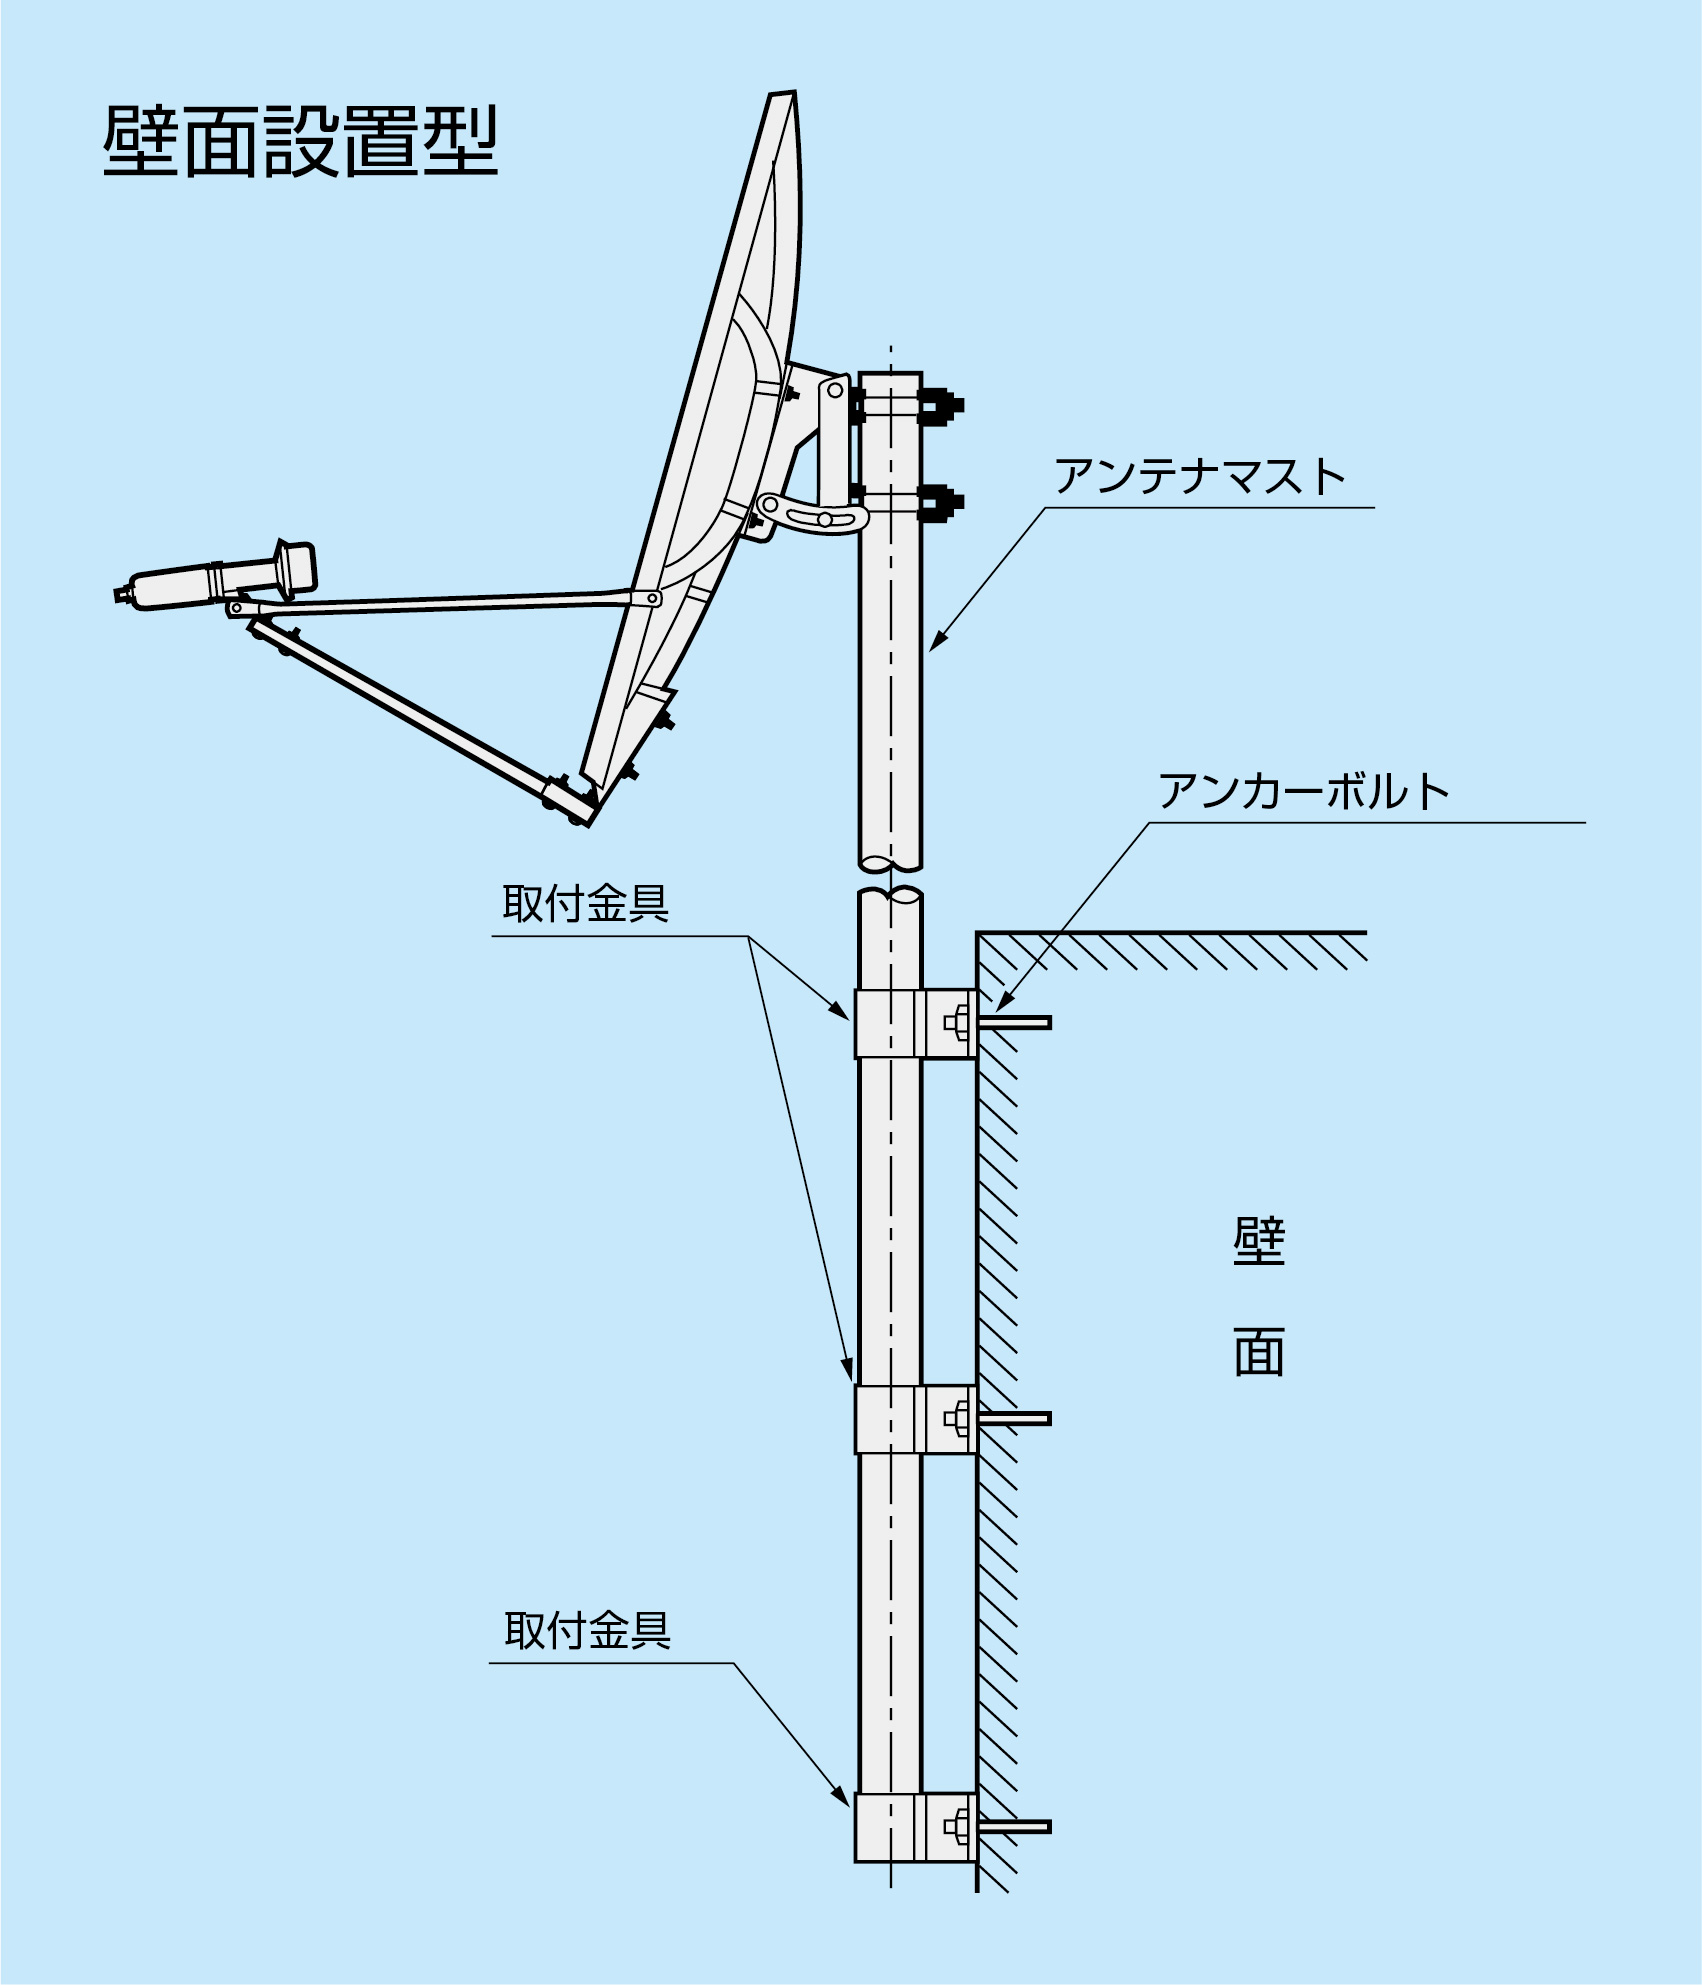 60cm型BS・110°CSアンテナ(右左旋円偏波受信用) 60SRL: テレビ受信用 